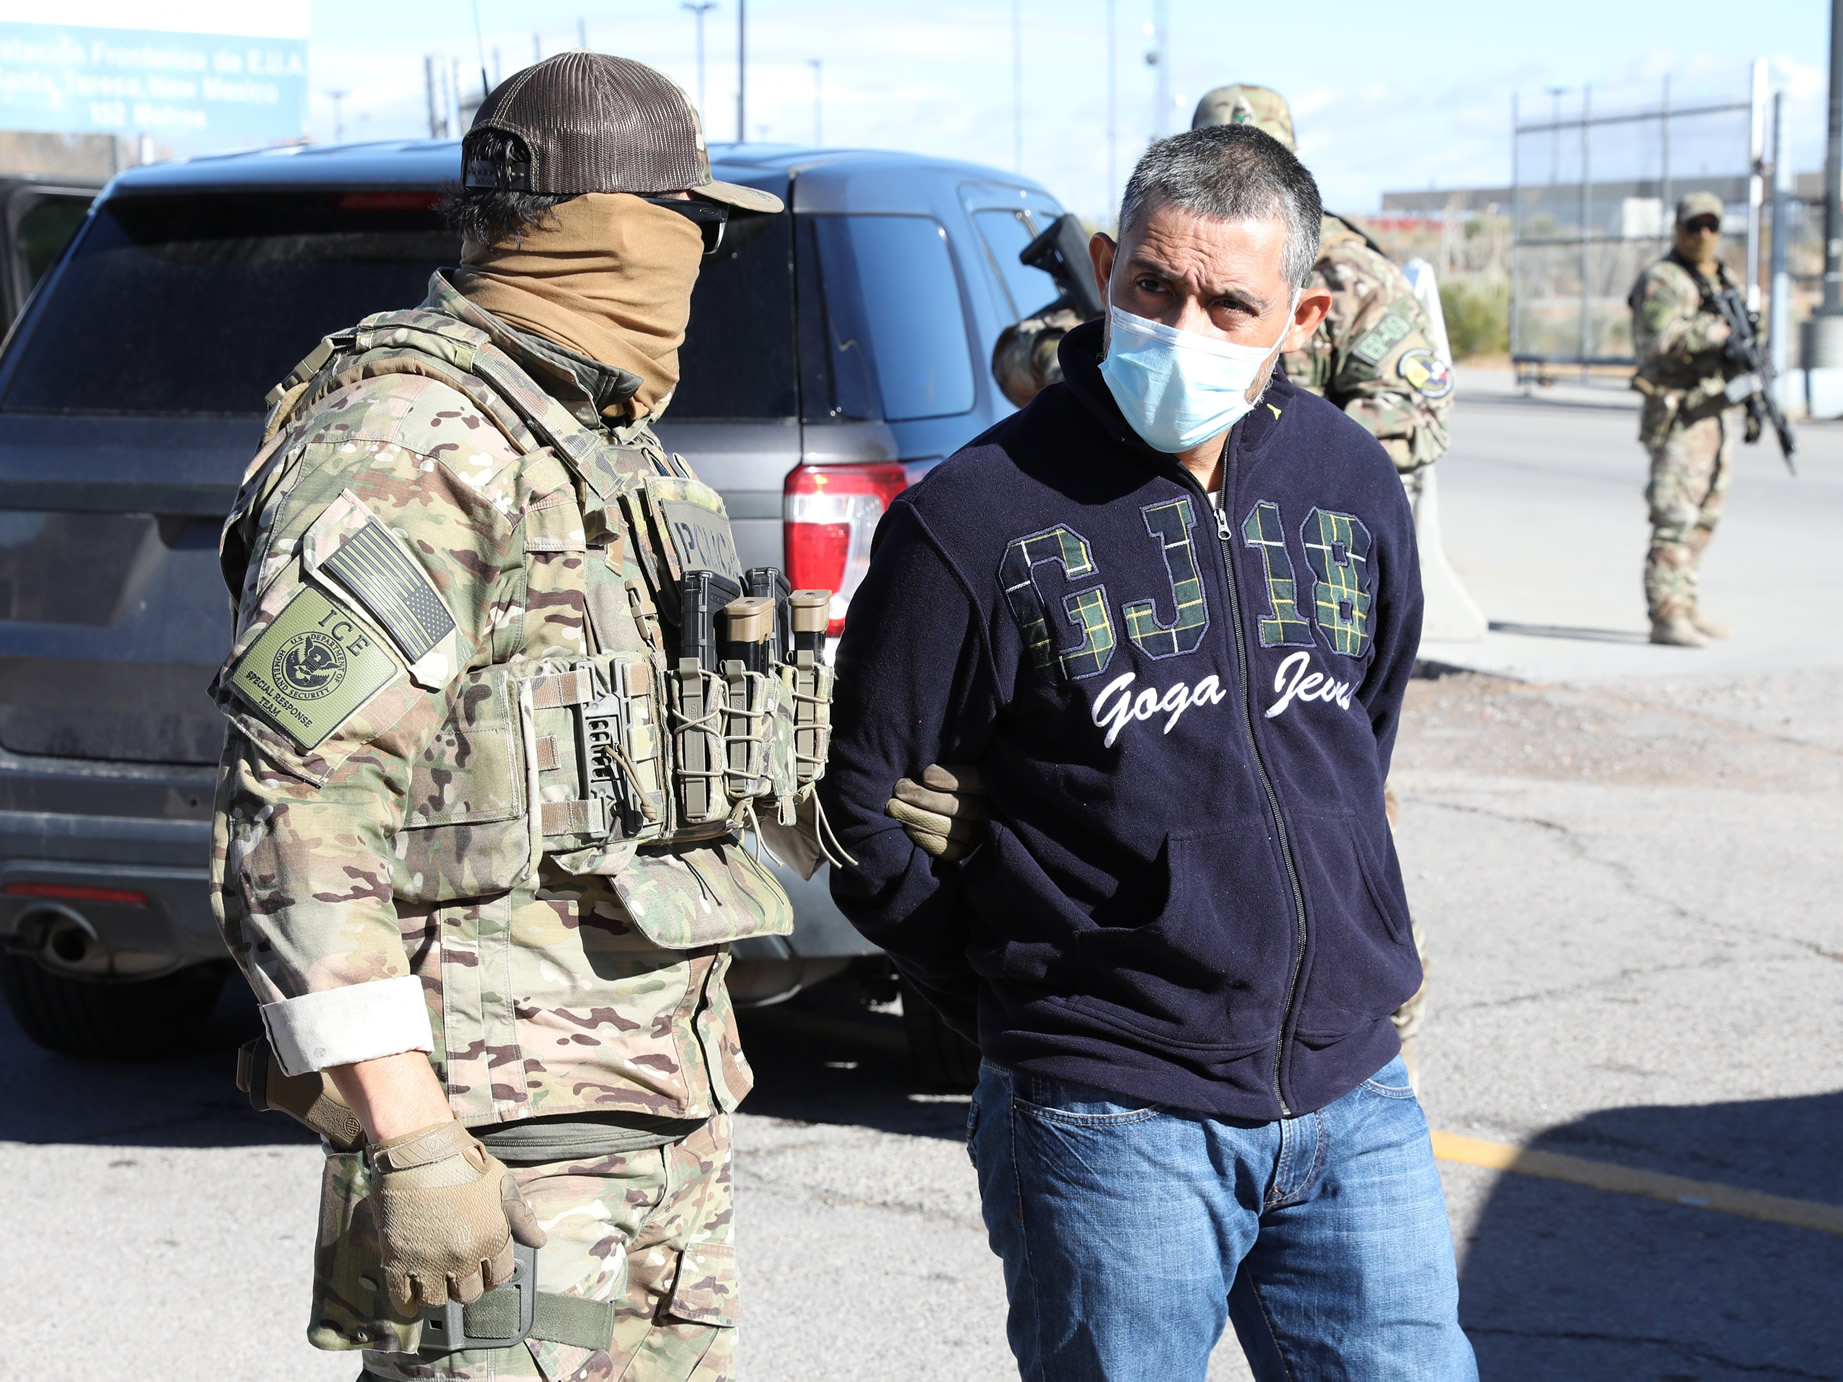 ERO officers turned over Alejandro Tenescalco-Mejia, 41, of Iguala, Guerrero, Mexico, to Mexican authorities at the international boundary at the Santa Teresa Port of Entry.